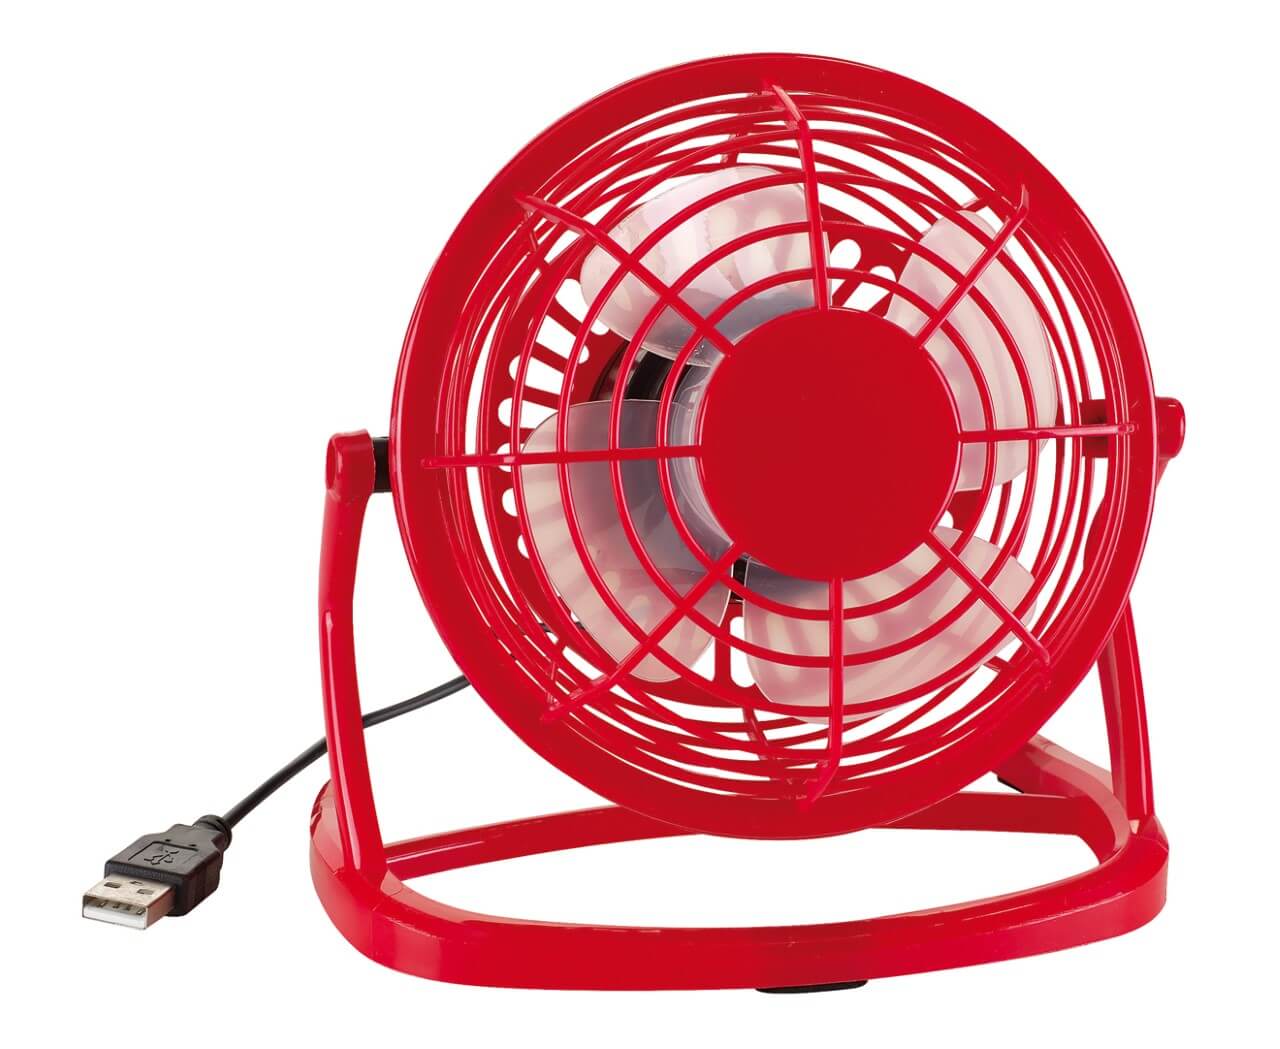 Fan n. Красный вентилятор. Венти. Красный маленький вентилятор. Огромный красный вентилятор.